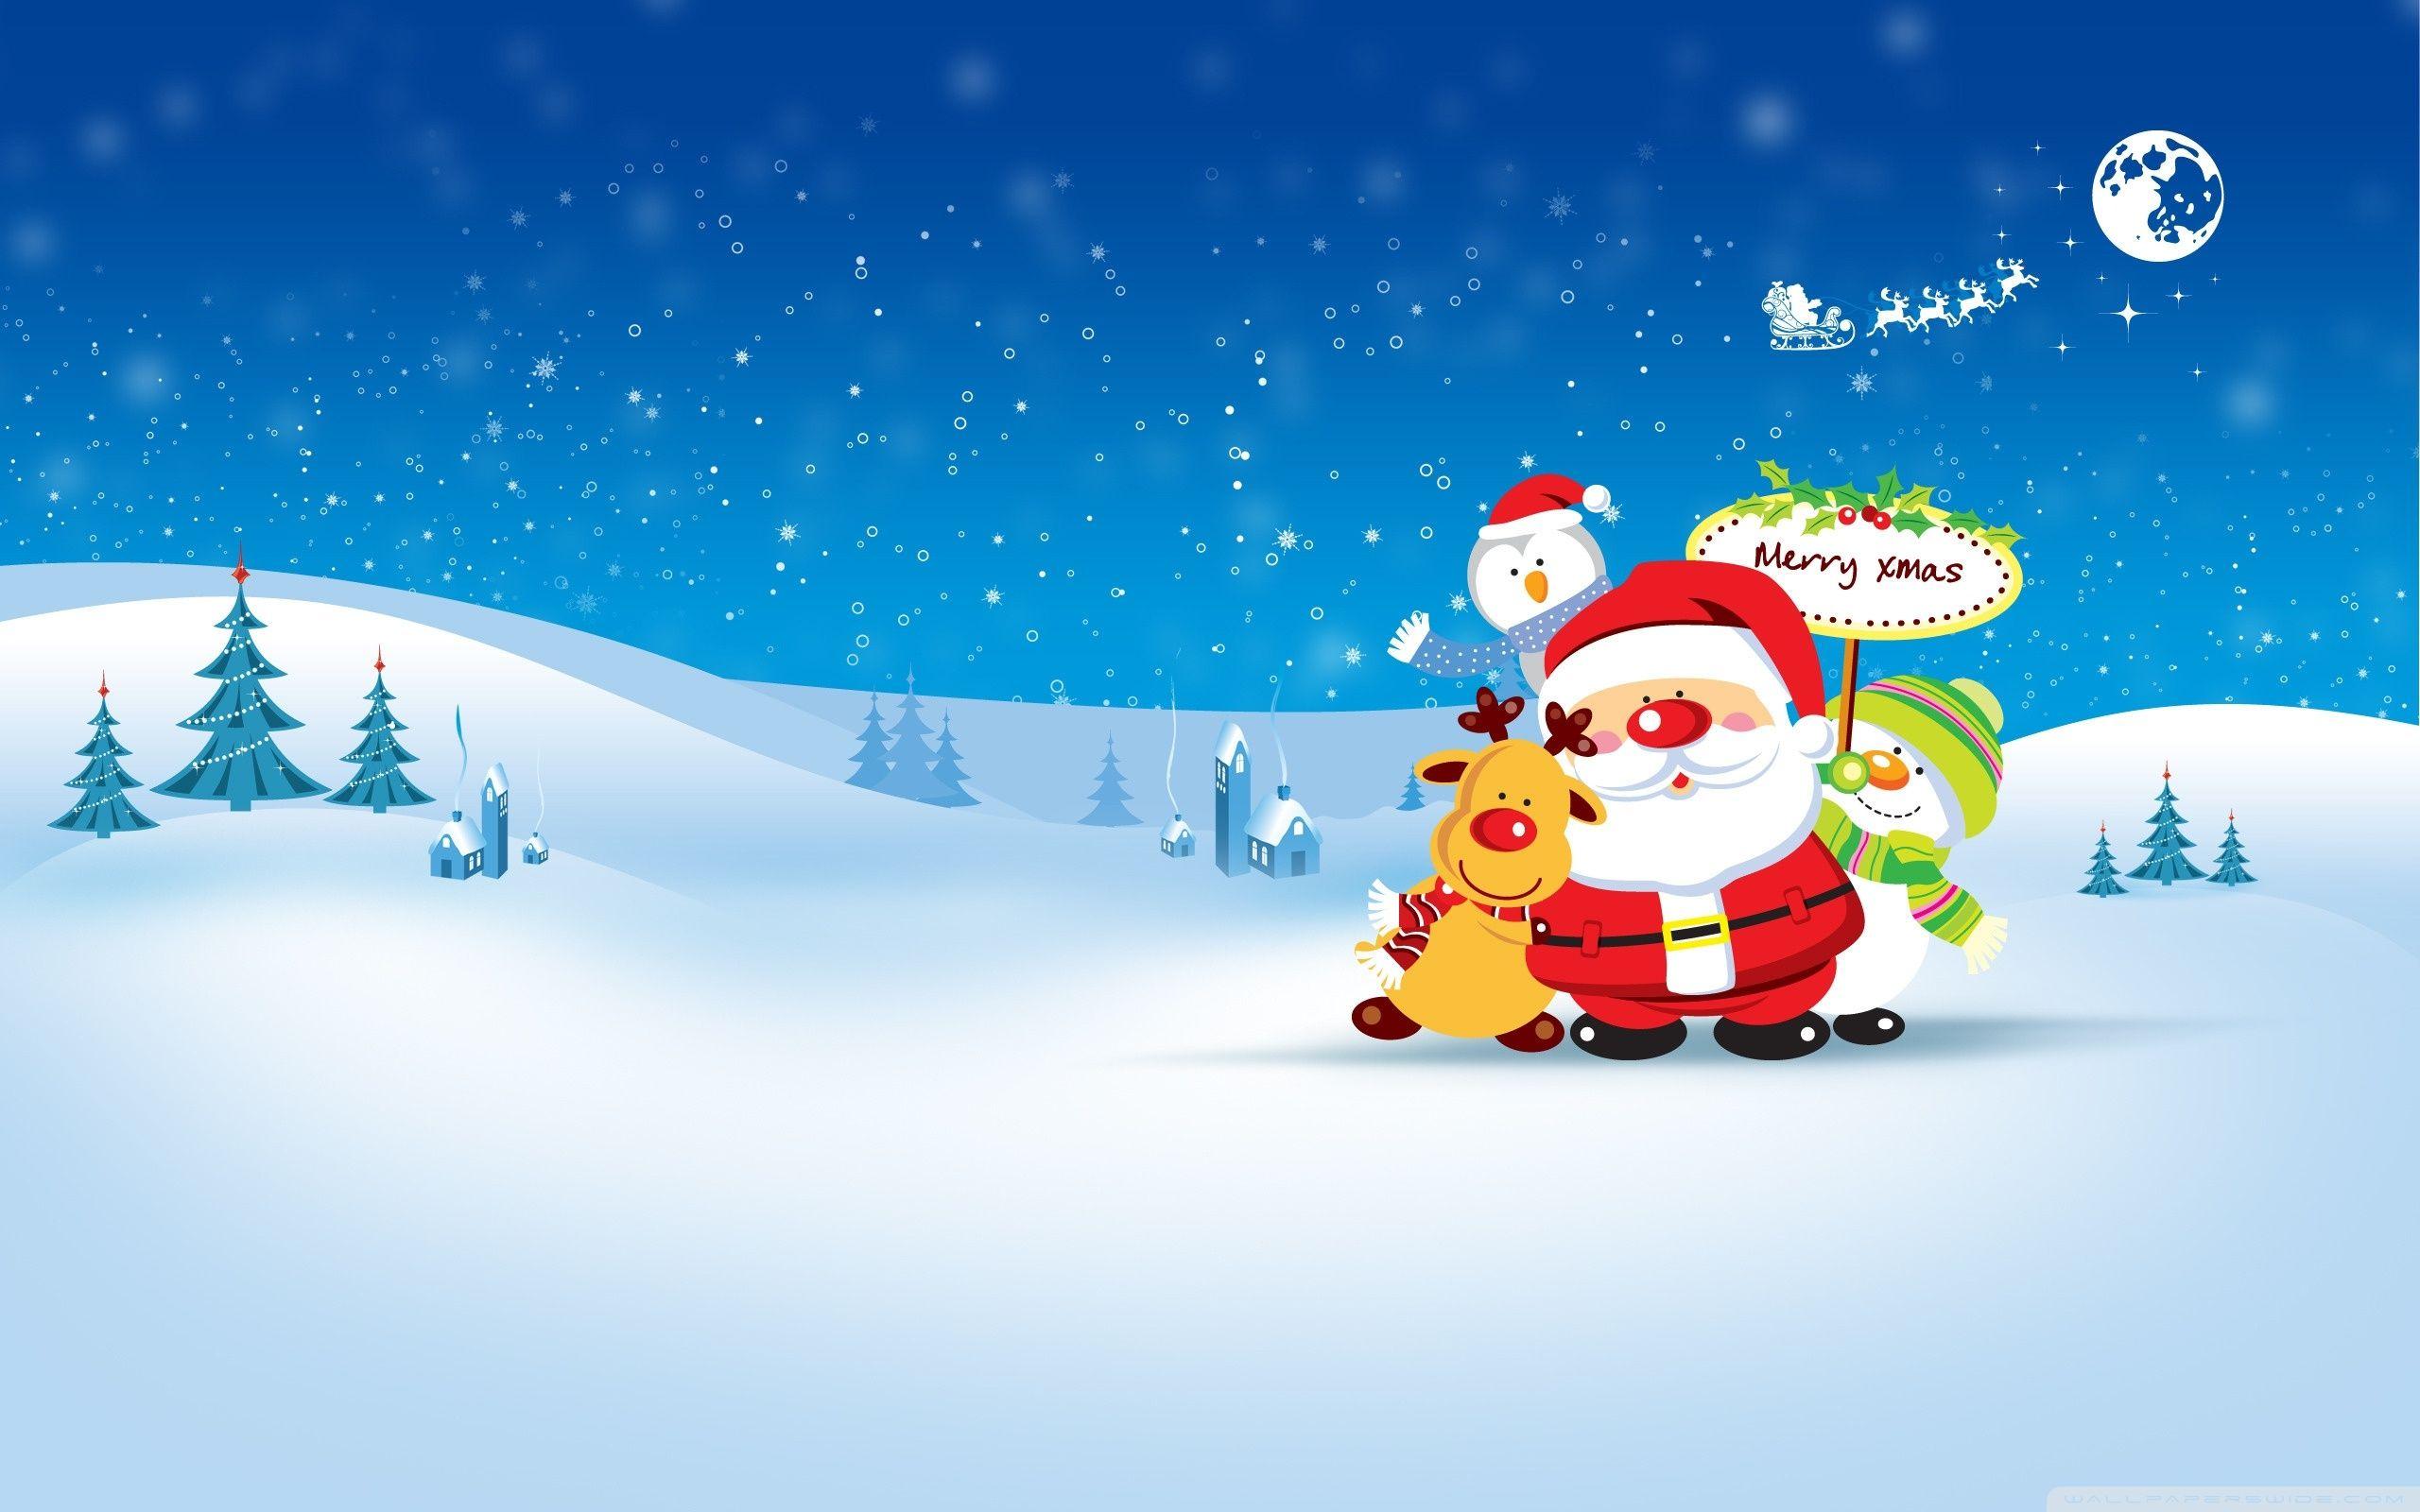 Cute Merry Christmas Desktop Wallpaper at